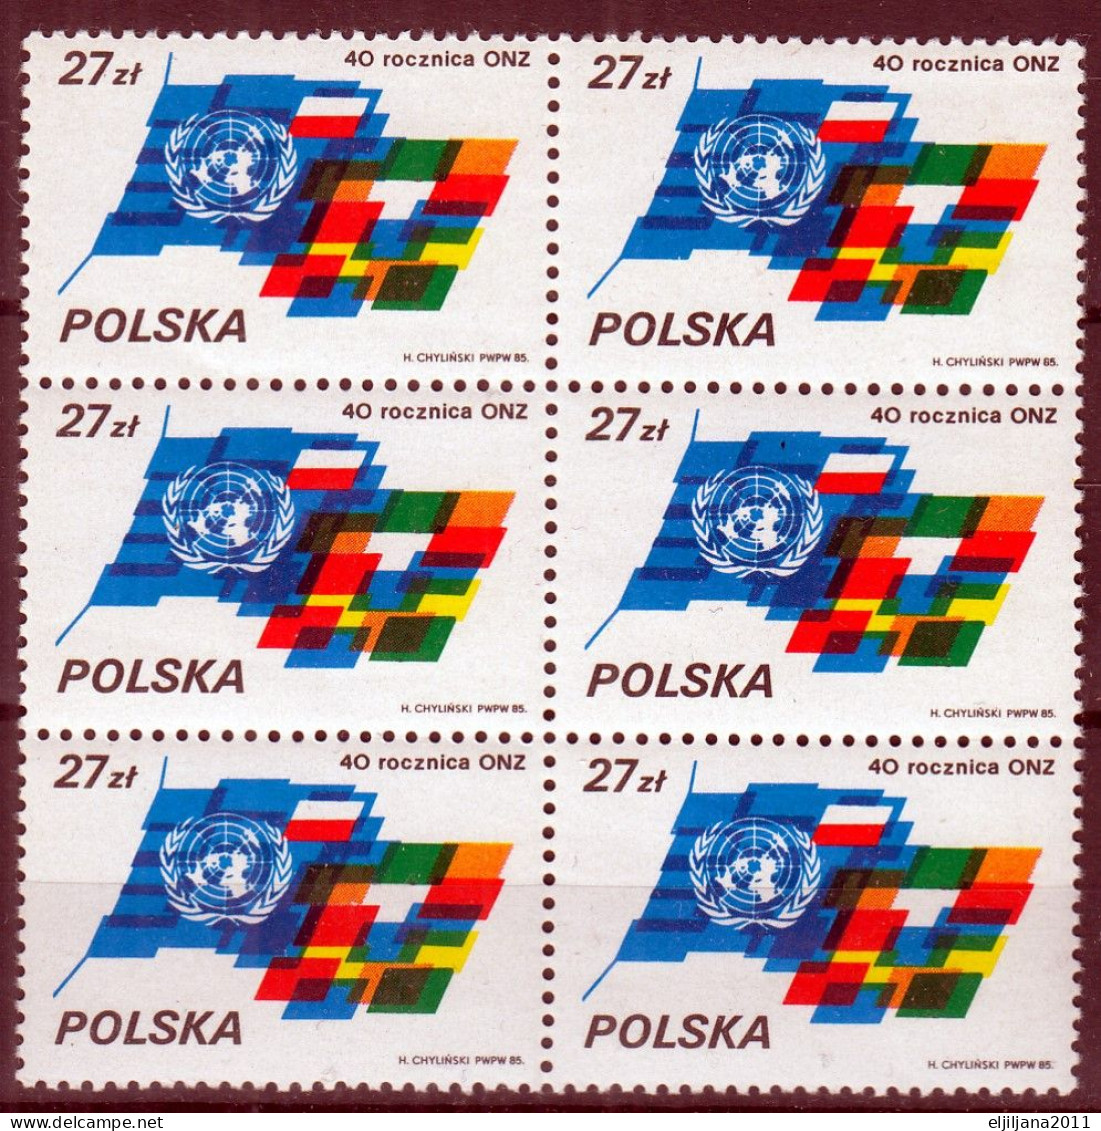 ⁕ Poland / Polska 1985 ⁕ United Nations 40th UN Mi.3004 ⁕ MNH Block Of 6 - Unused Stamps